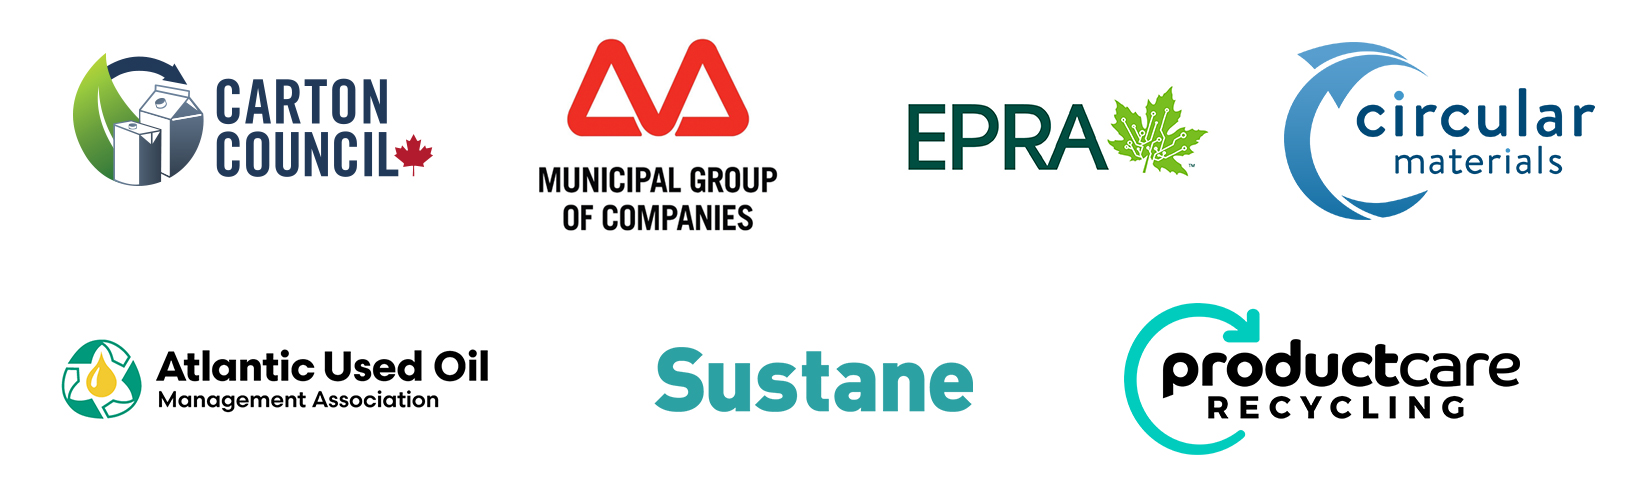 Sponsor logos: Carton Council, Municipal Group of Companies, EPRA, Circular Materials, Atlantic Used Oil Management Association, Sustane Technologies, Produce Care Recycling